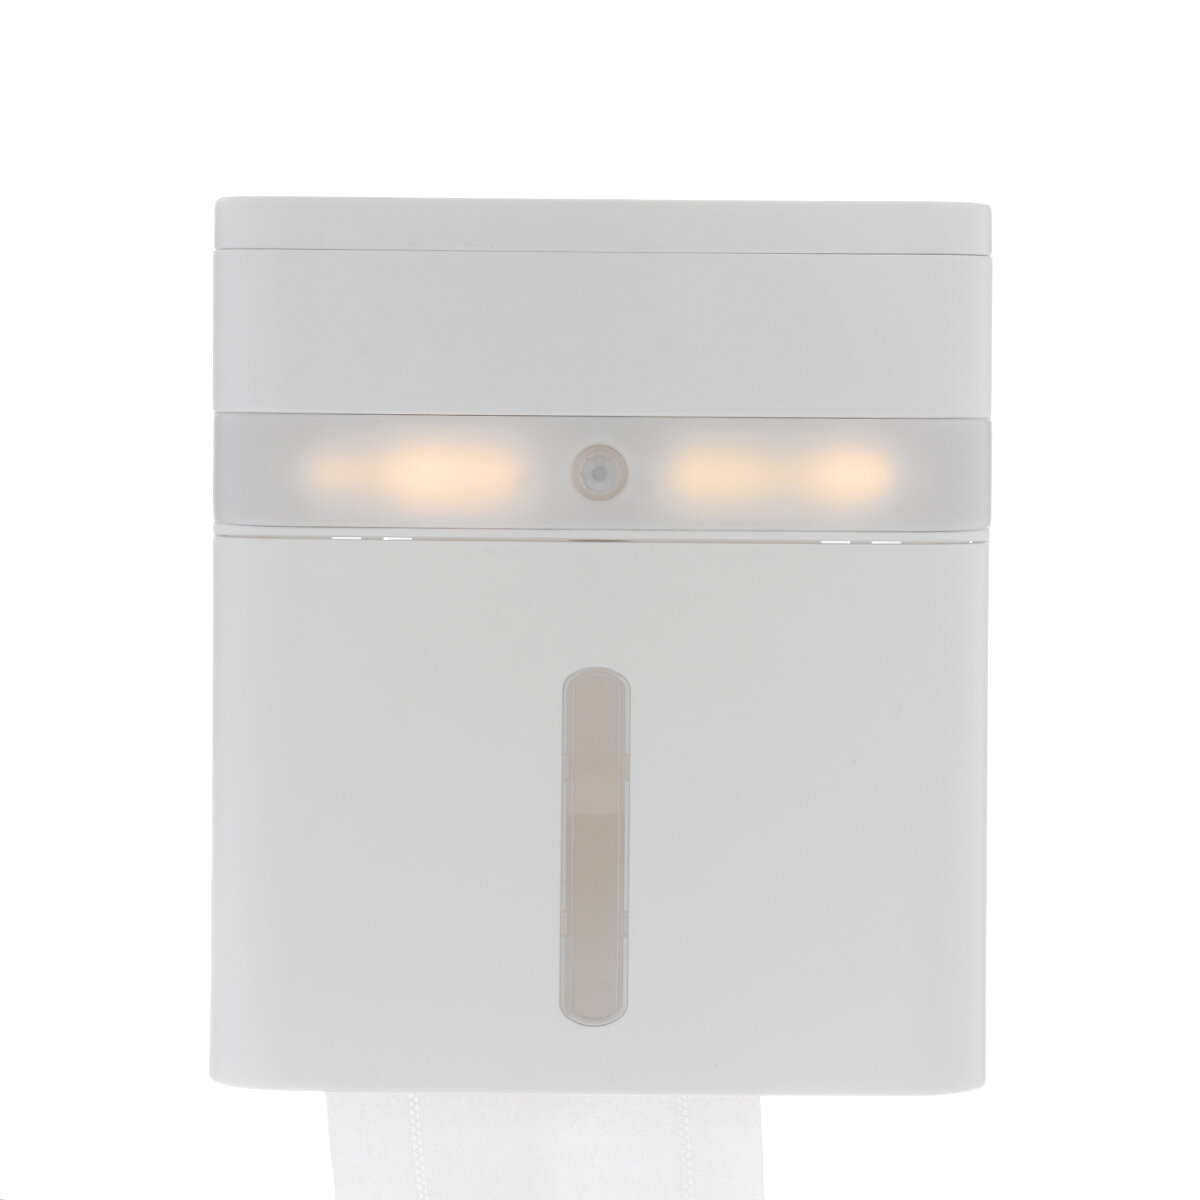 Draagbare Tissue Box Wandmontage Inductie Nachtlampje Smart Toilet Tissue Box Huishoudelijke Wasruim